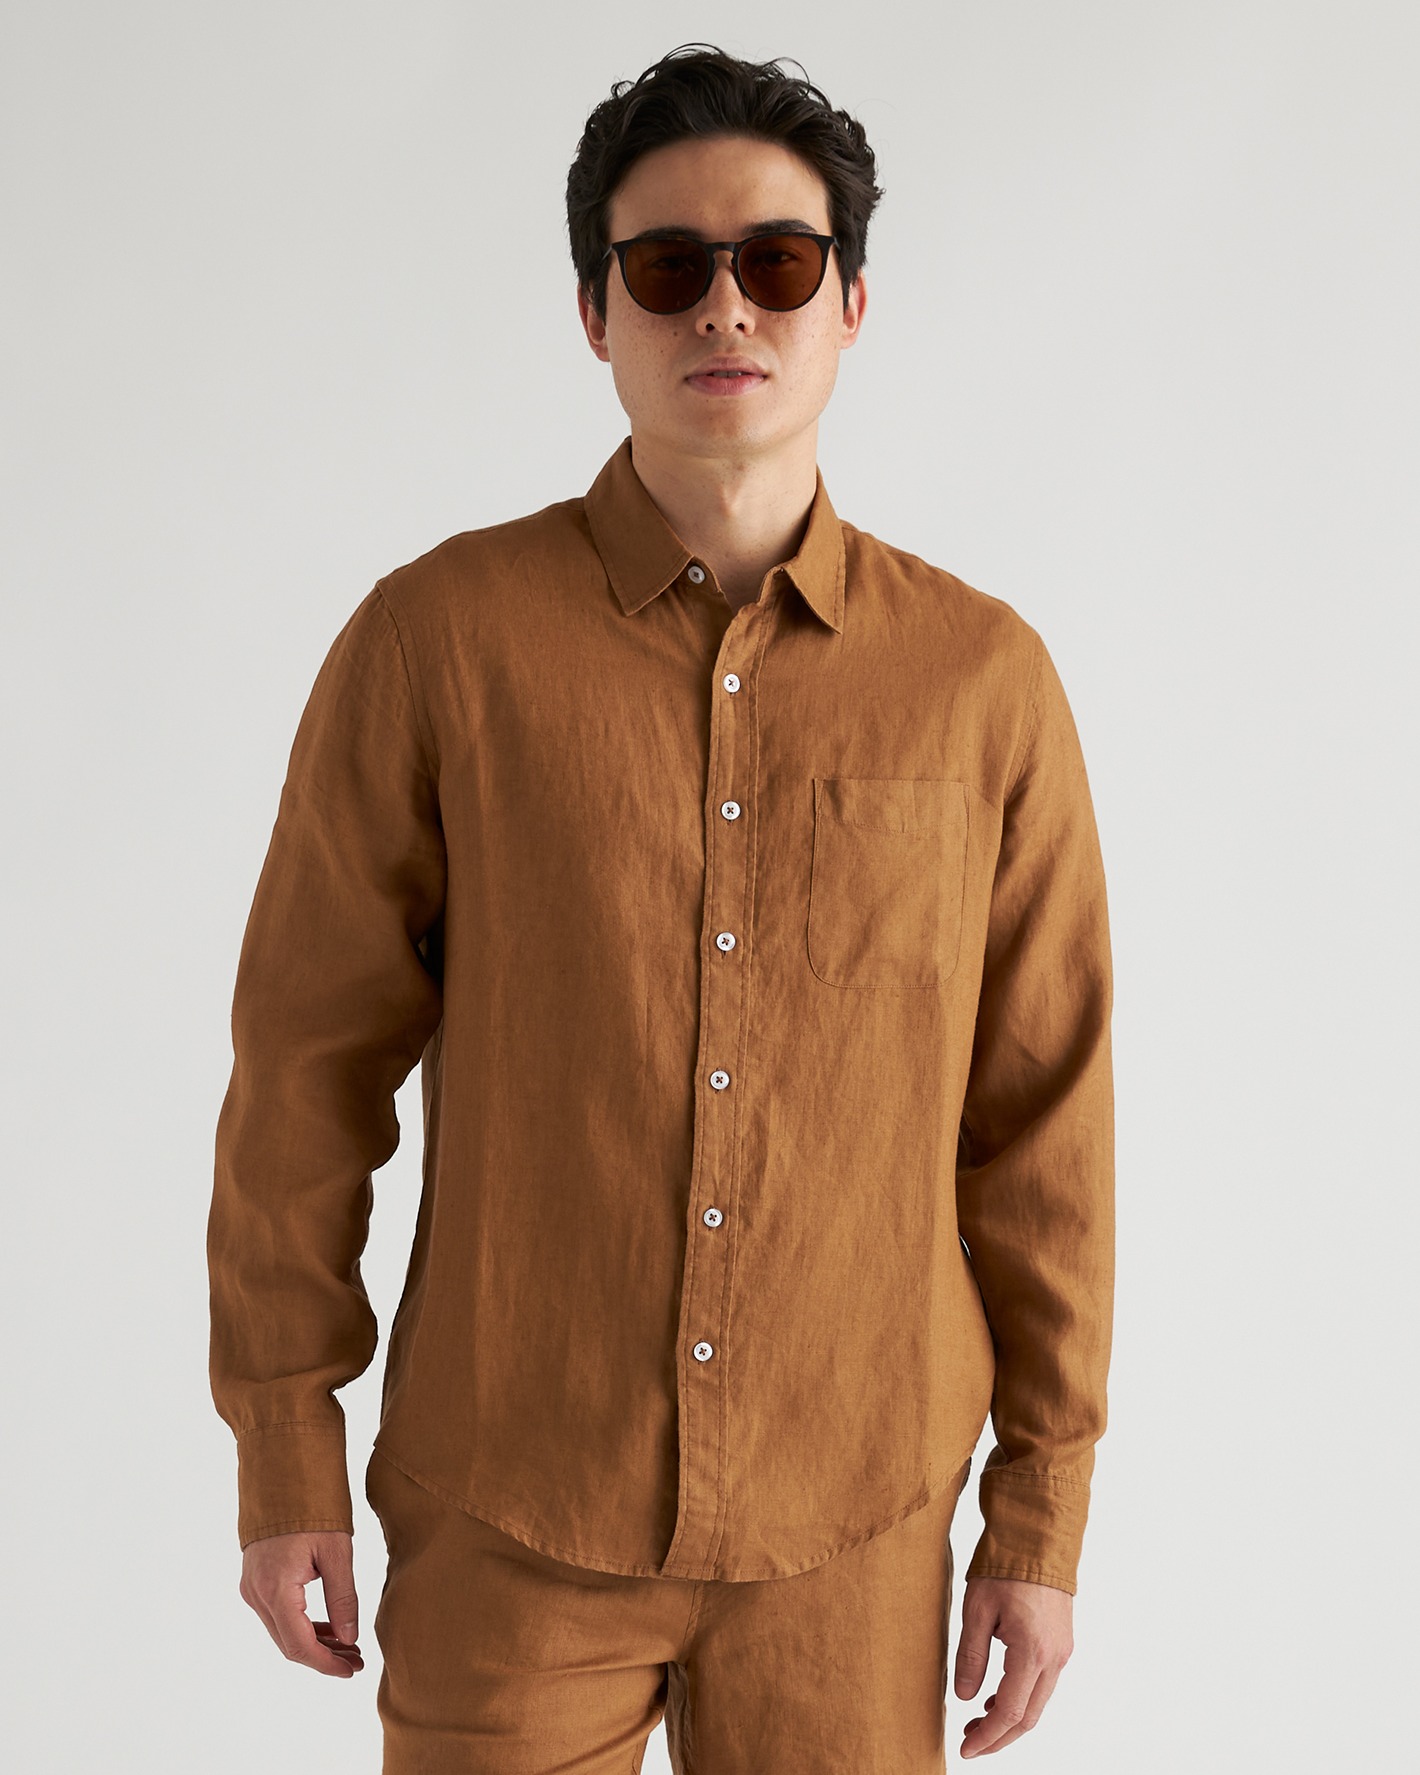 Quince Men's 100% European Linen Long Sleeve Pocket Shirt In Golden Brown